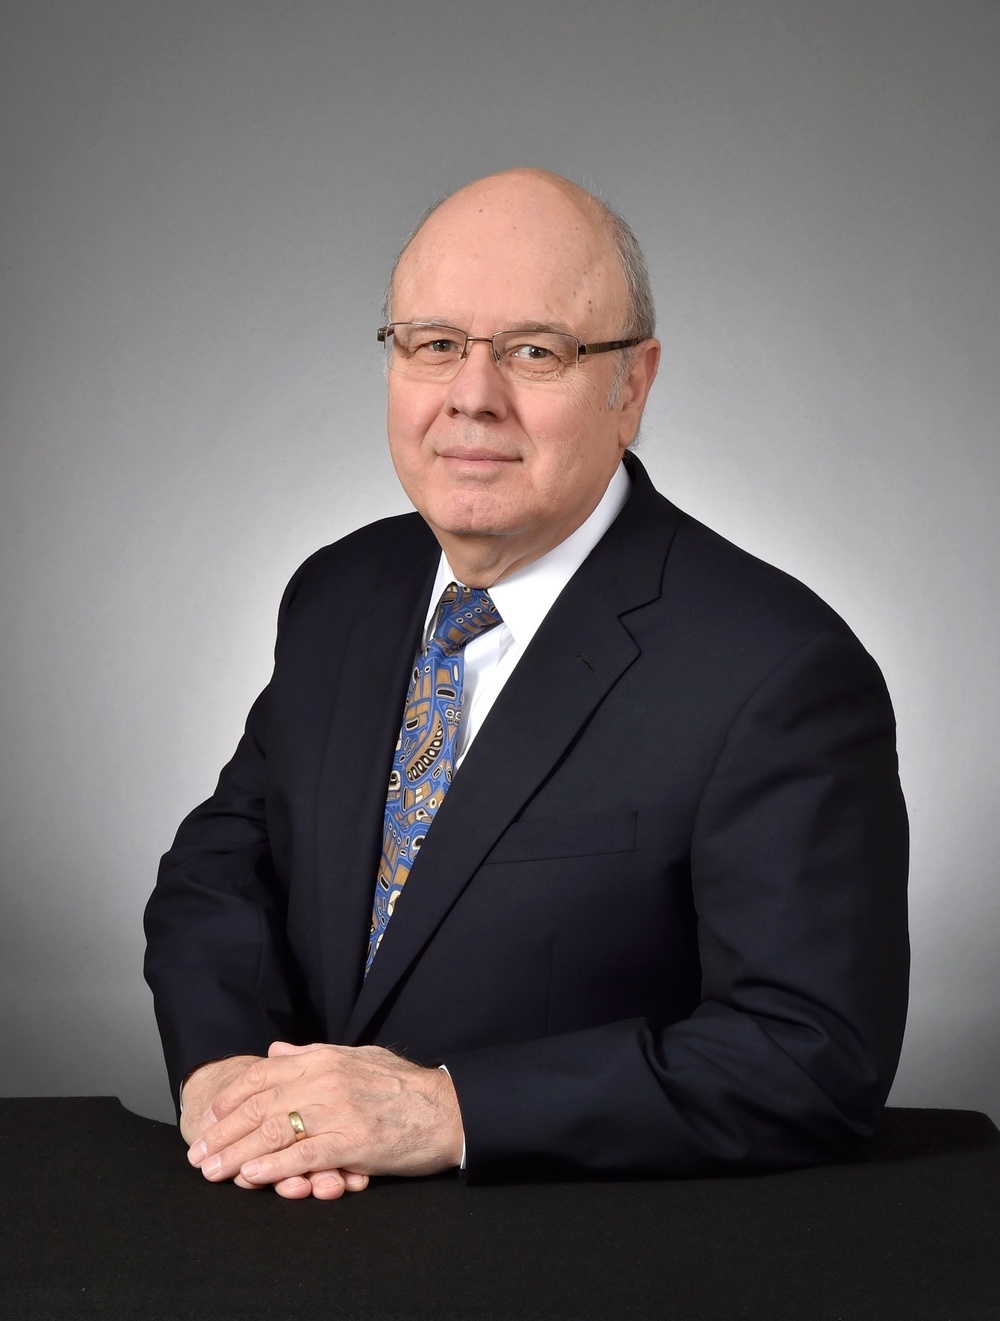 NRL's Dr. Gerald M. Borsuk Receives 2017 Presidential Distinguished Executive Rank Award